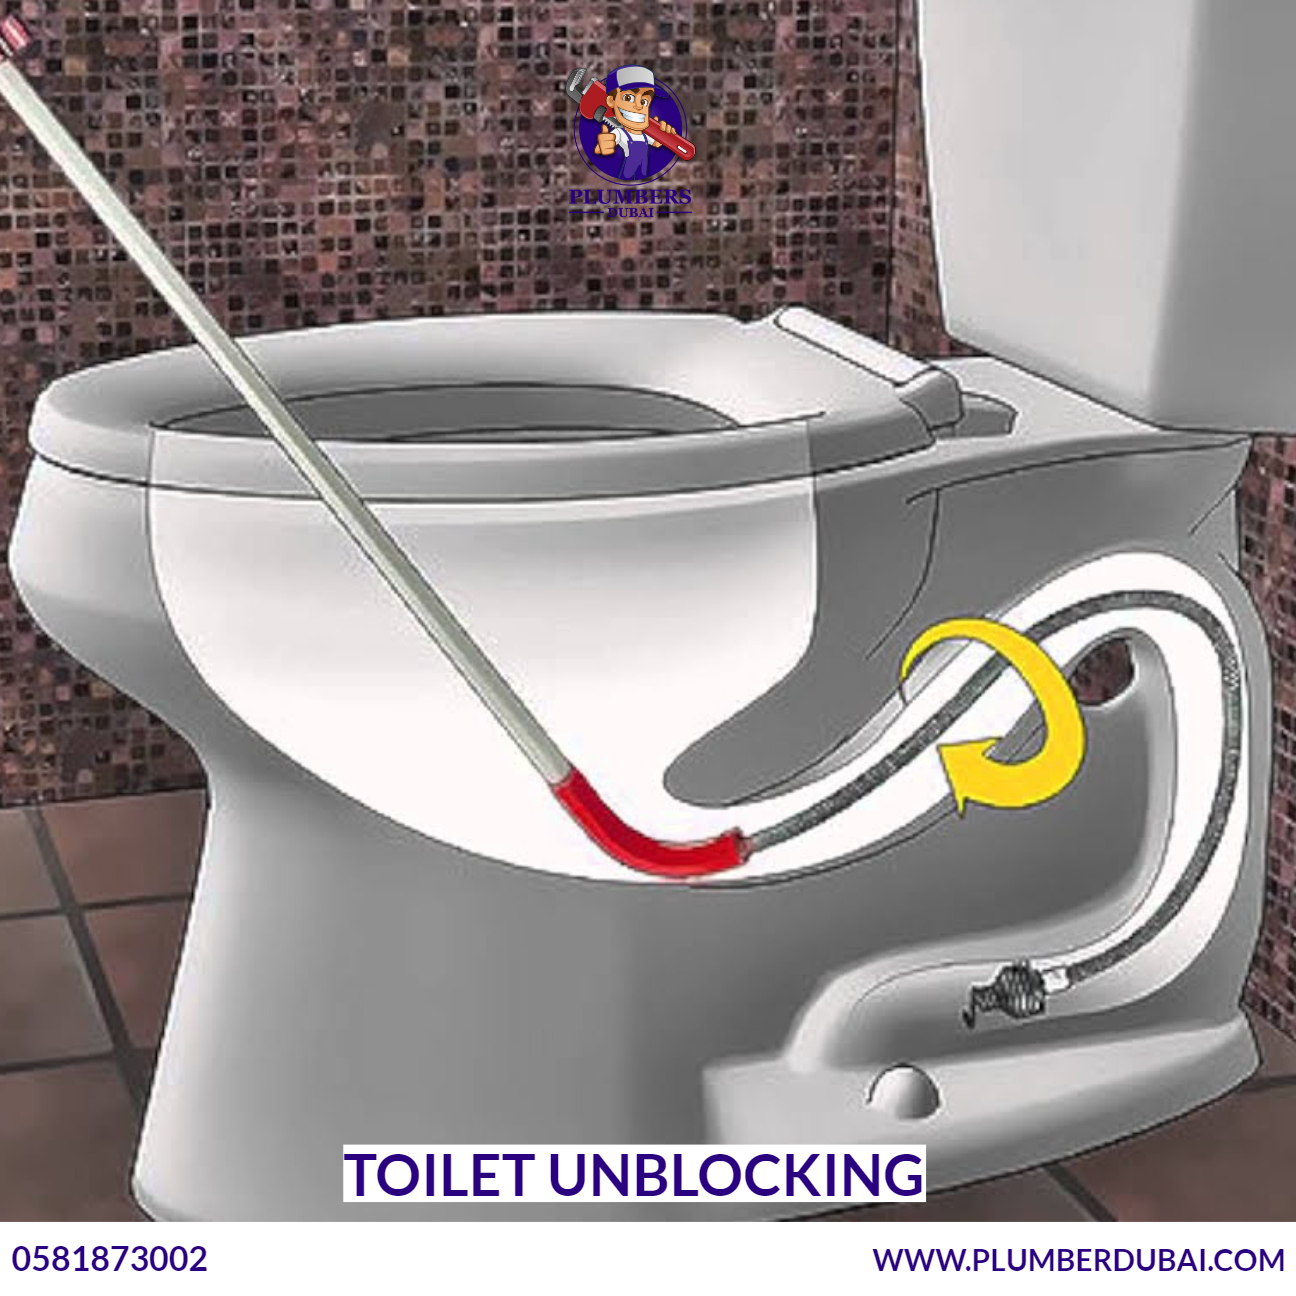 Toilet unblocking